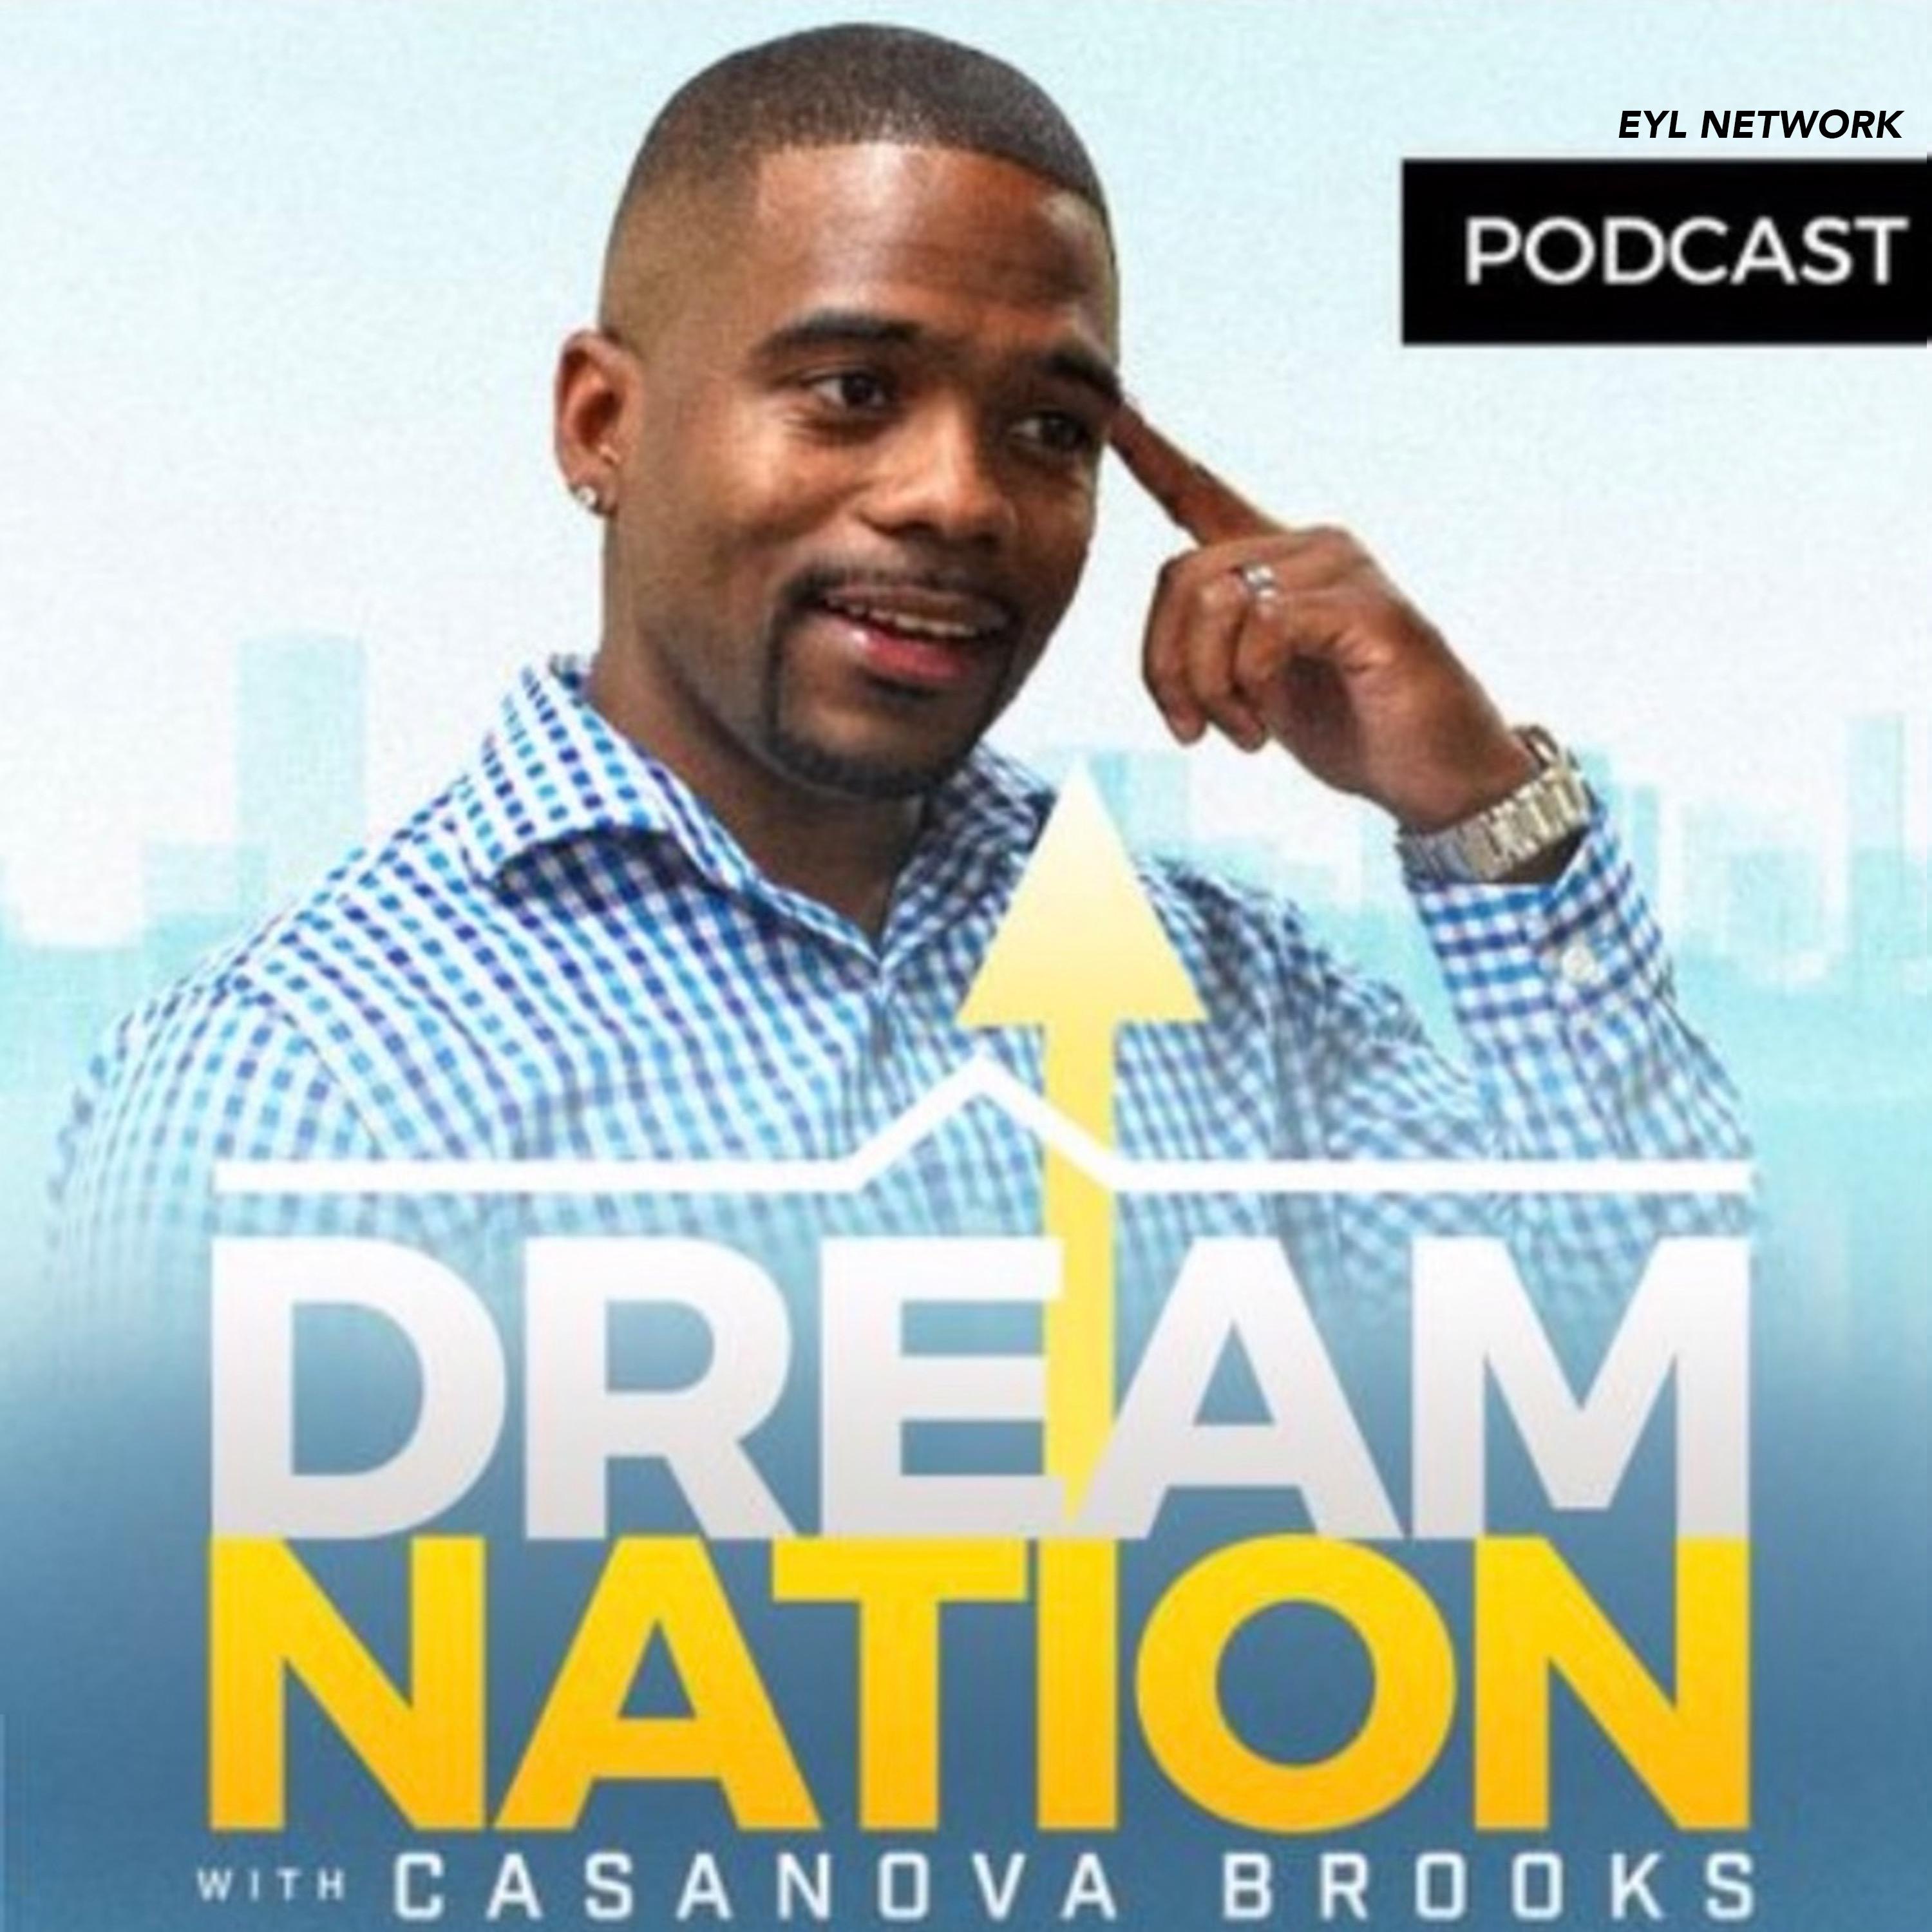 The DreamNation Podcast With Casanova Brooks